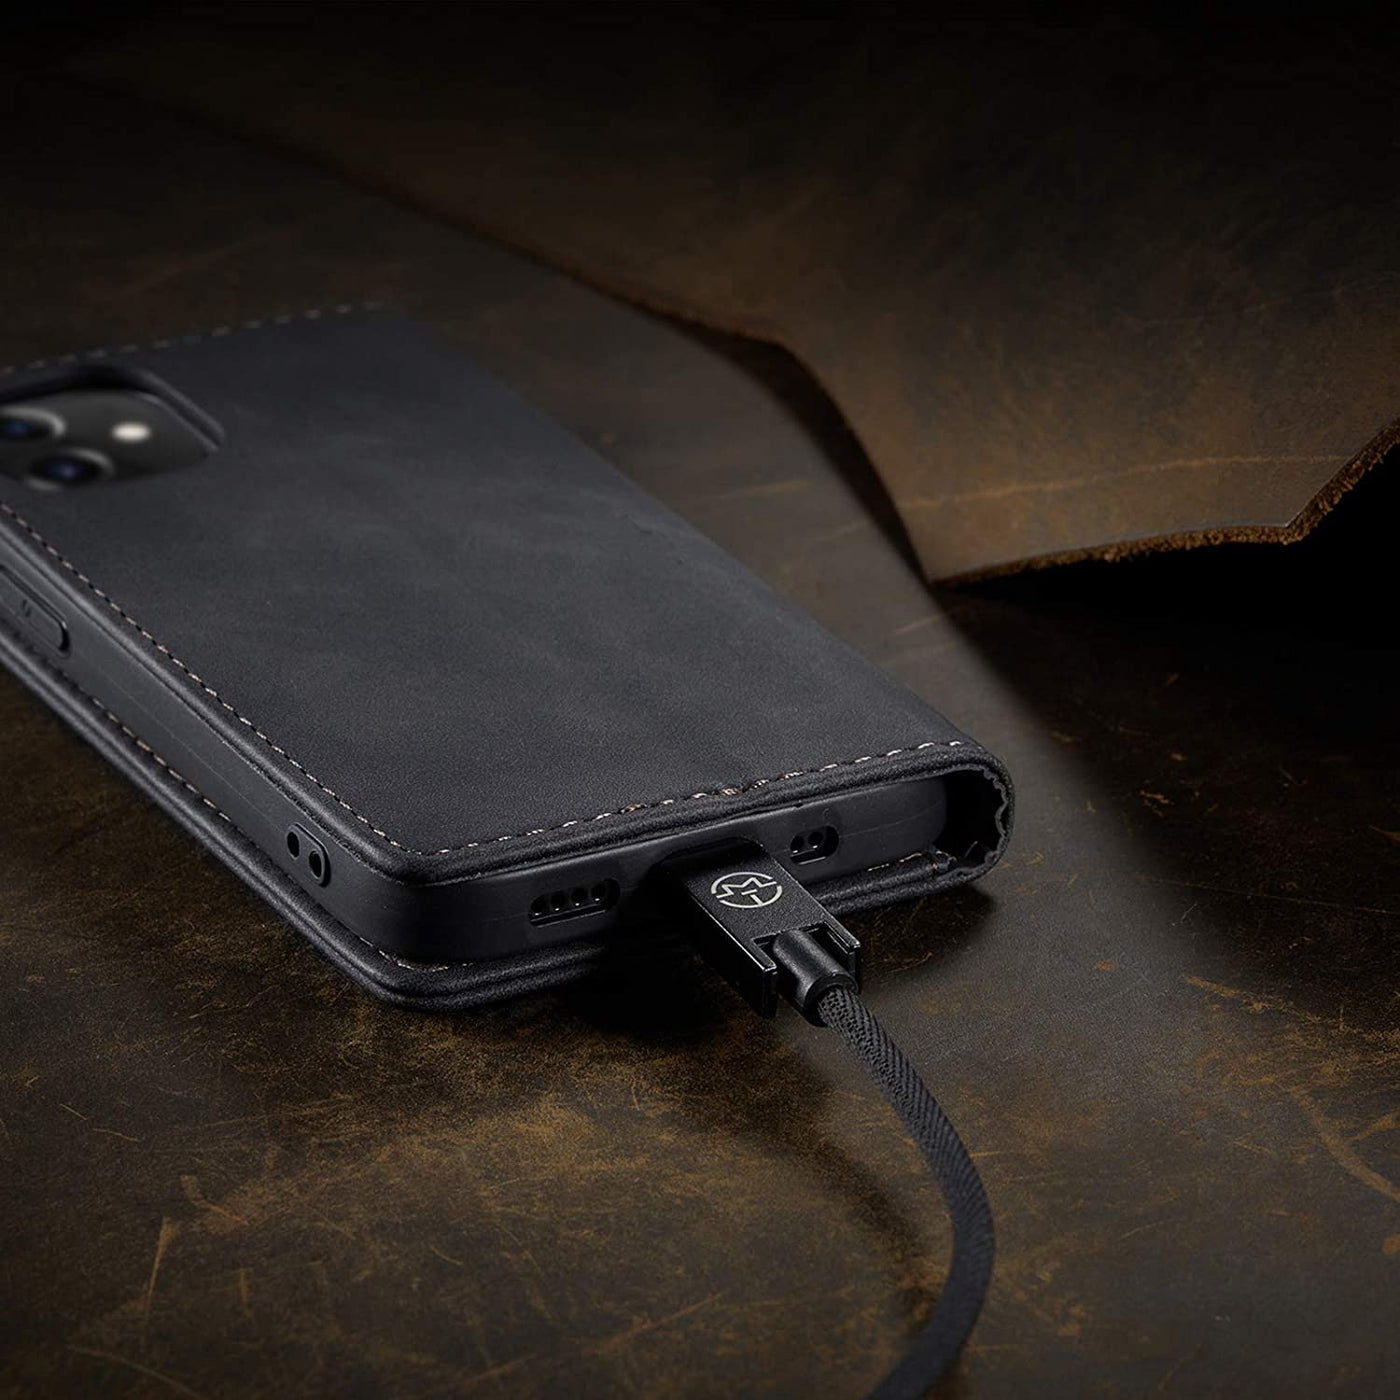 Excelsior Premium Leather Wallet flip Cover Case For Apple iPhone 12 Mini